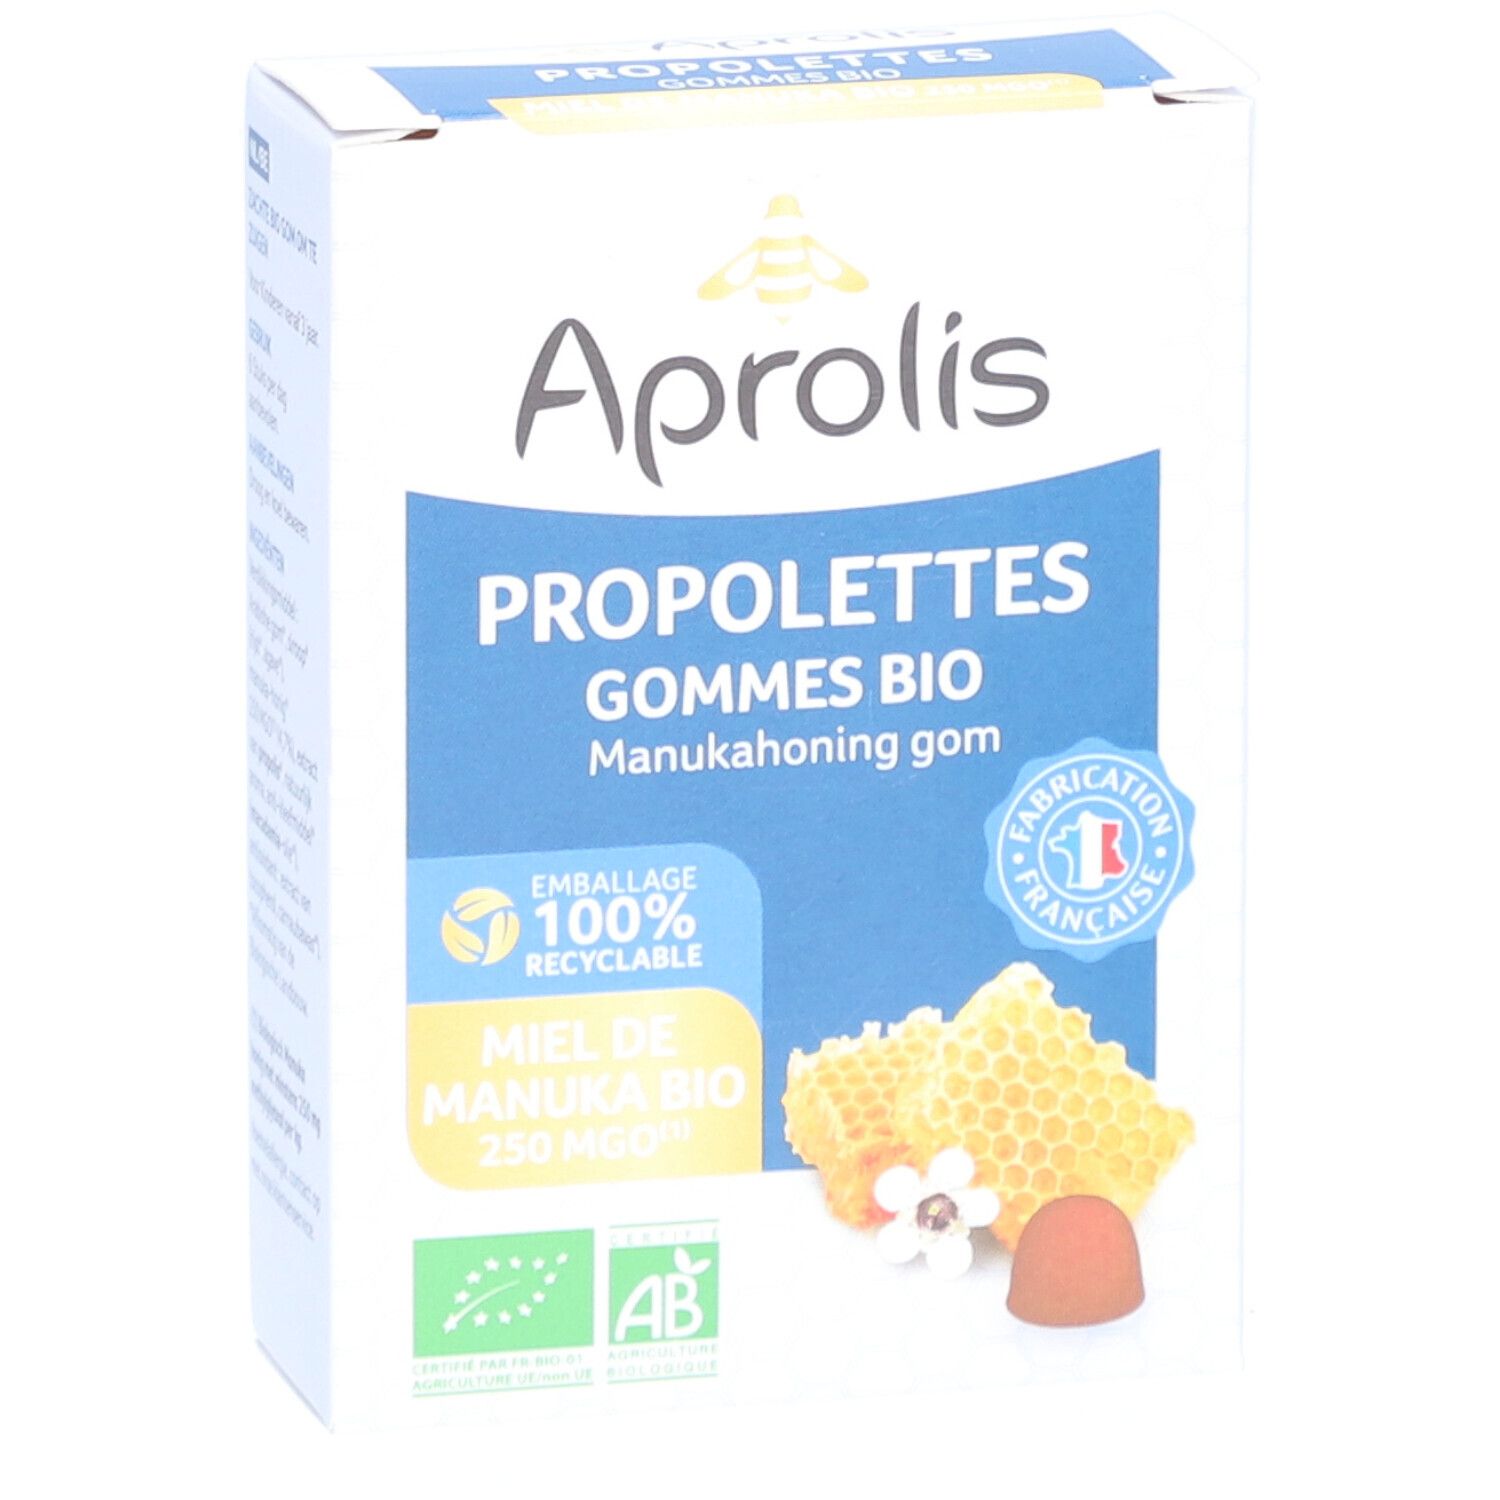 Be-Life Aprolis® Propolettes Manuka Bio